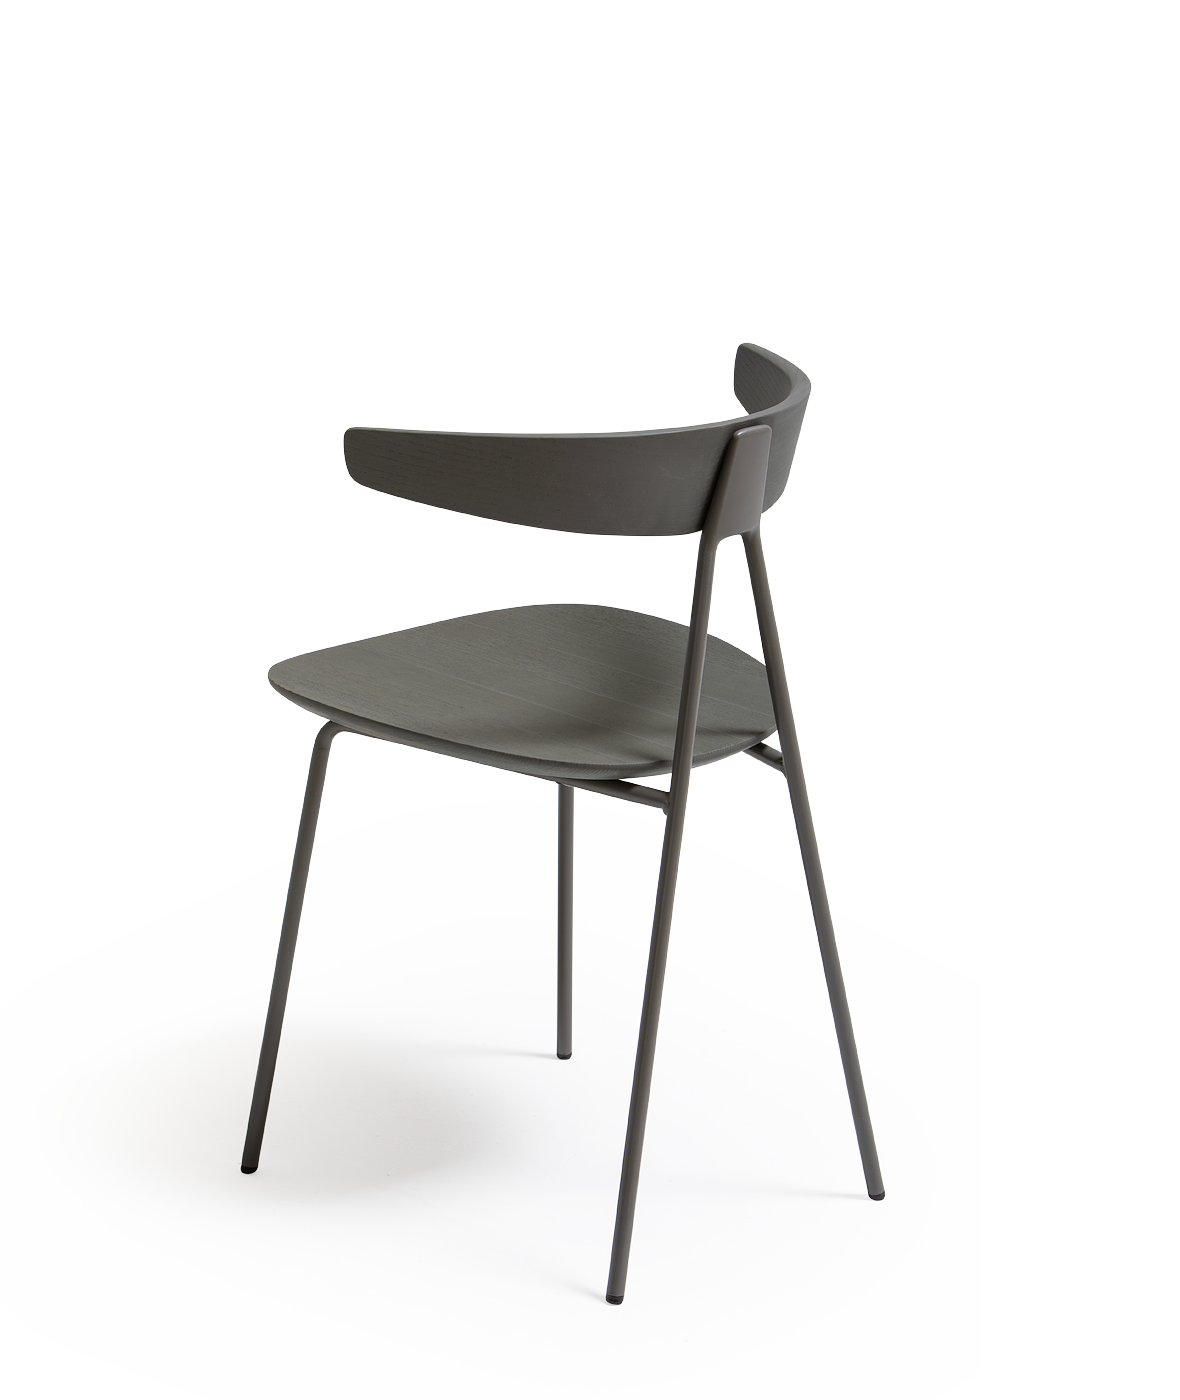 Vergés - Compass chair with metallic legs